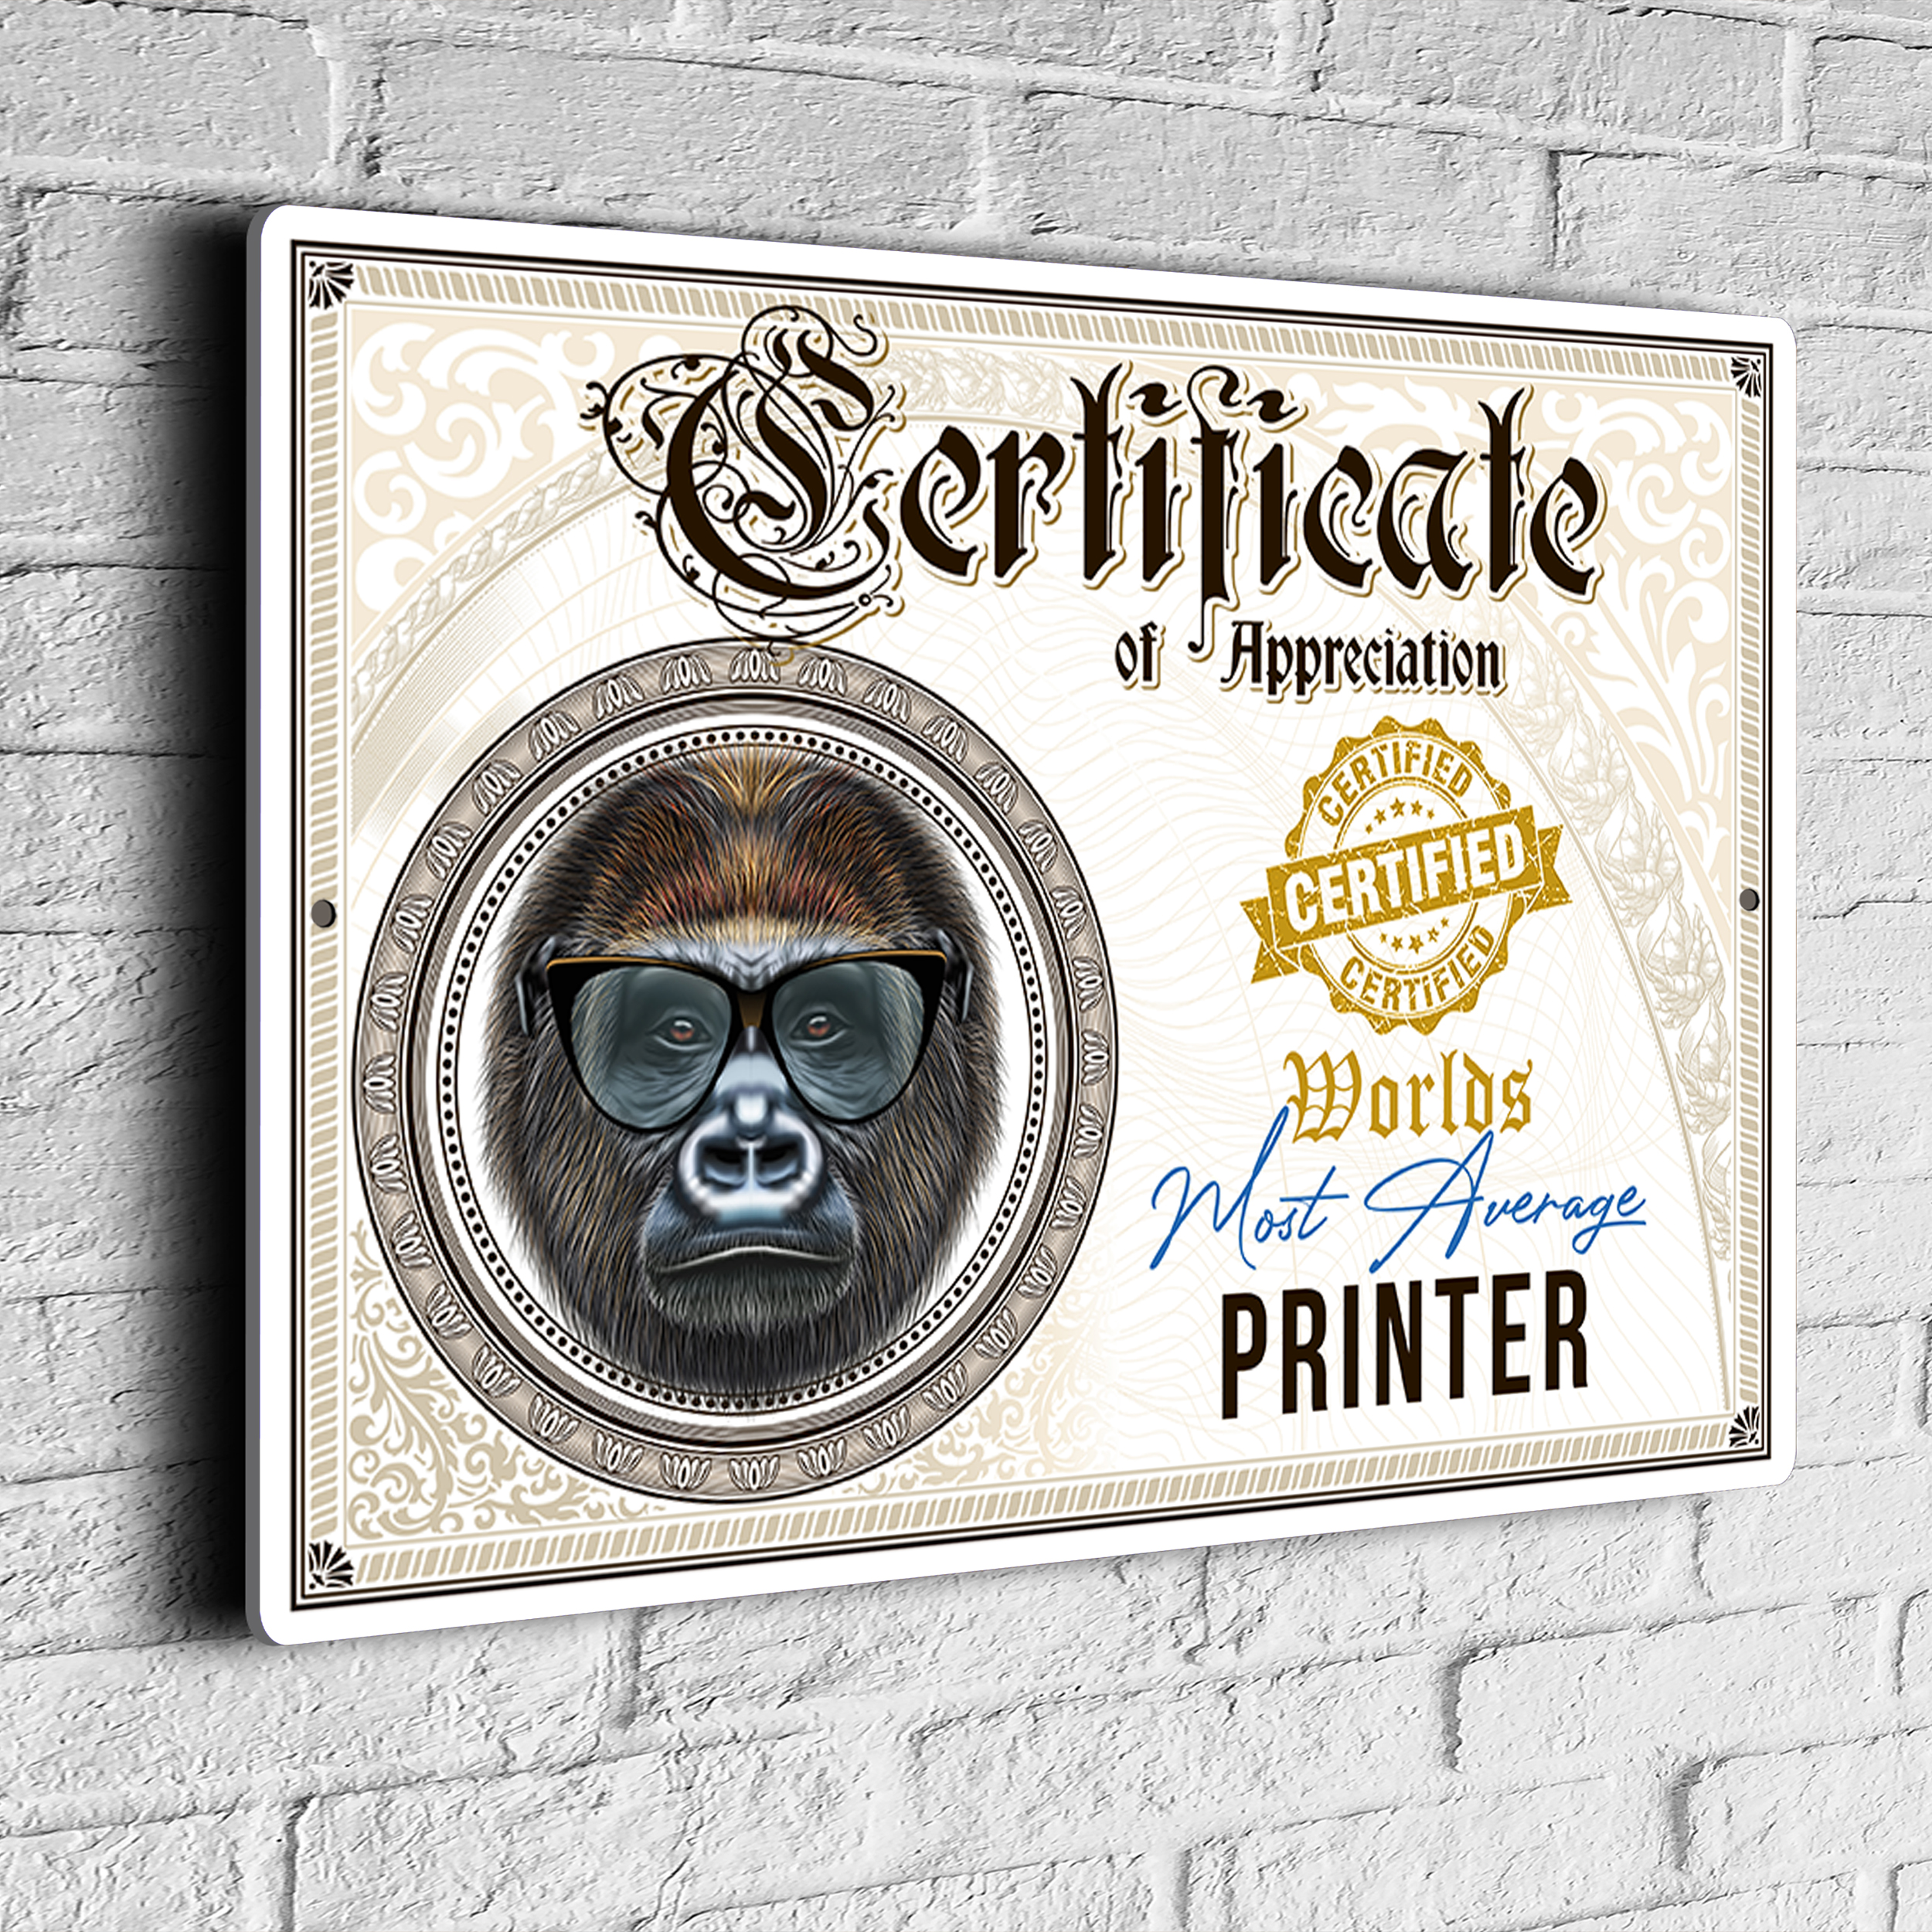 Fun Printer Certificate